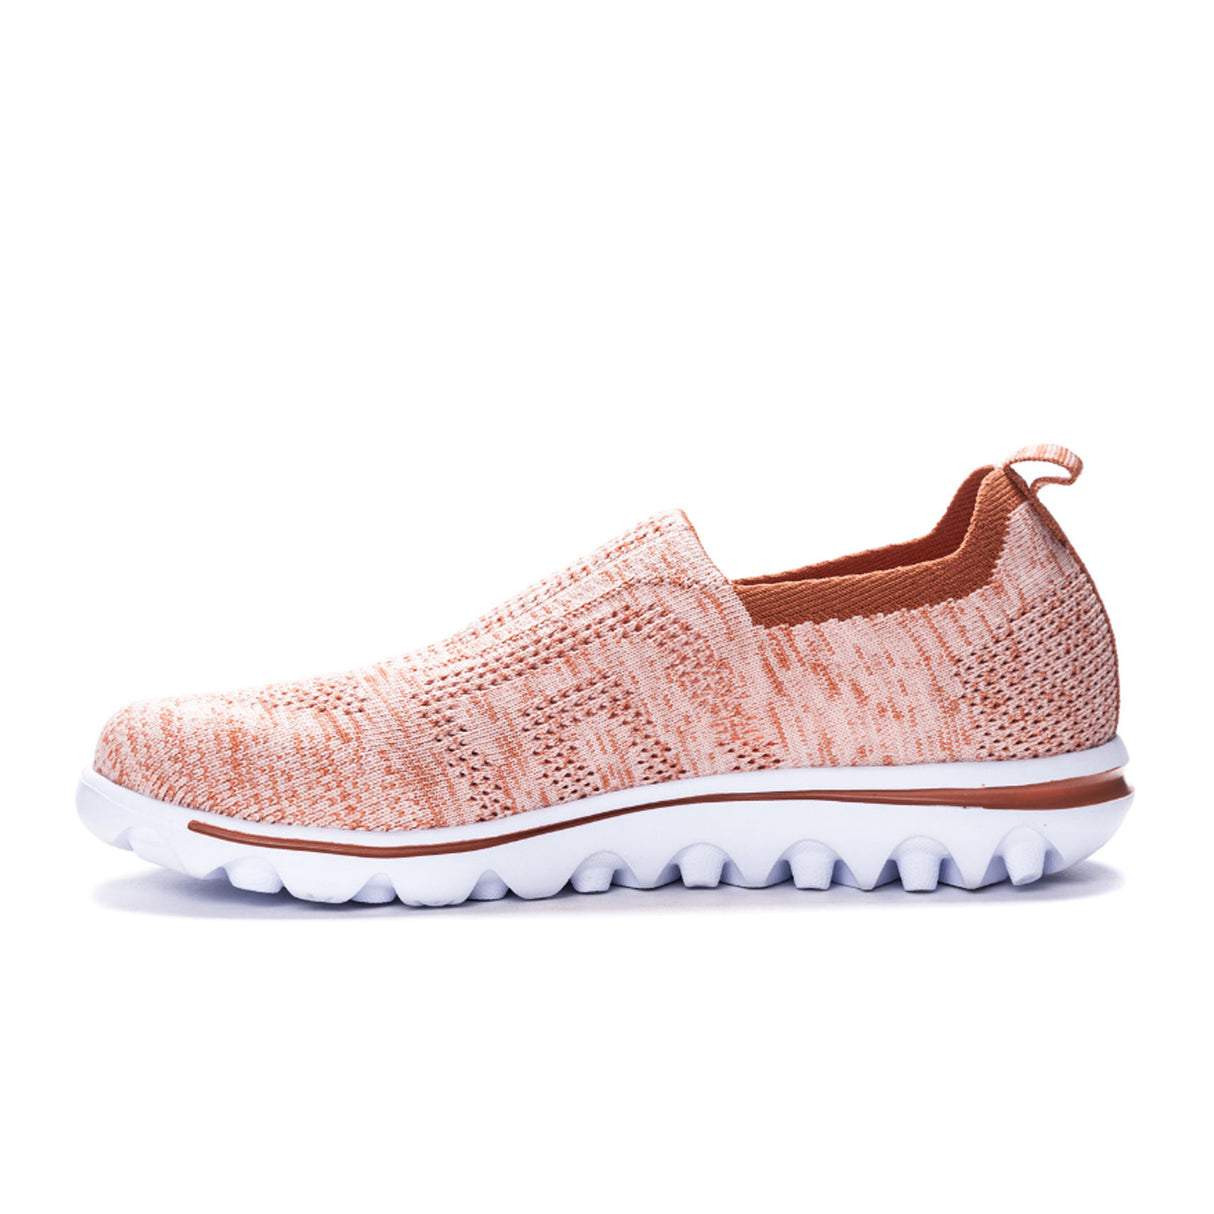 Propet TravelActiv Stretch Slip On Sneaker (Women) - Rose Dress-Casual - Slip Ons - The Heel Shoe Fitters